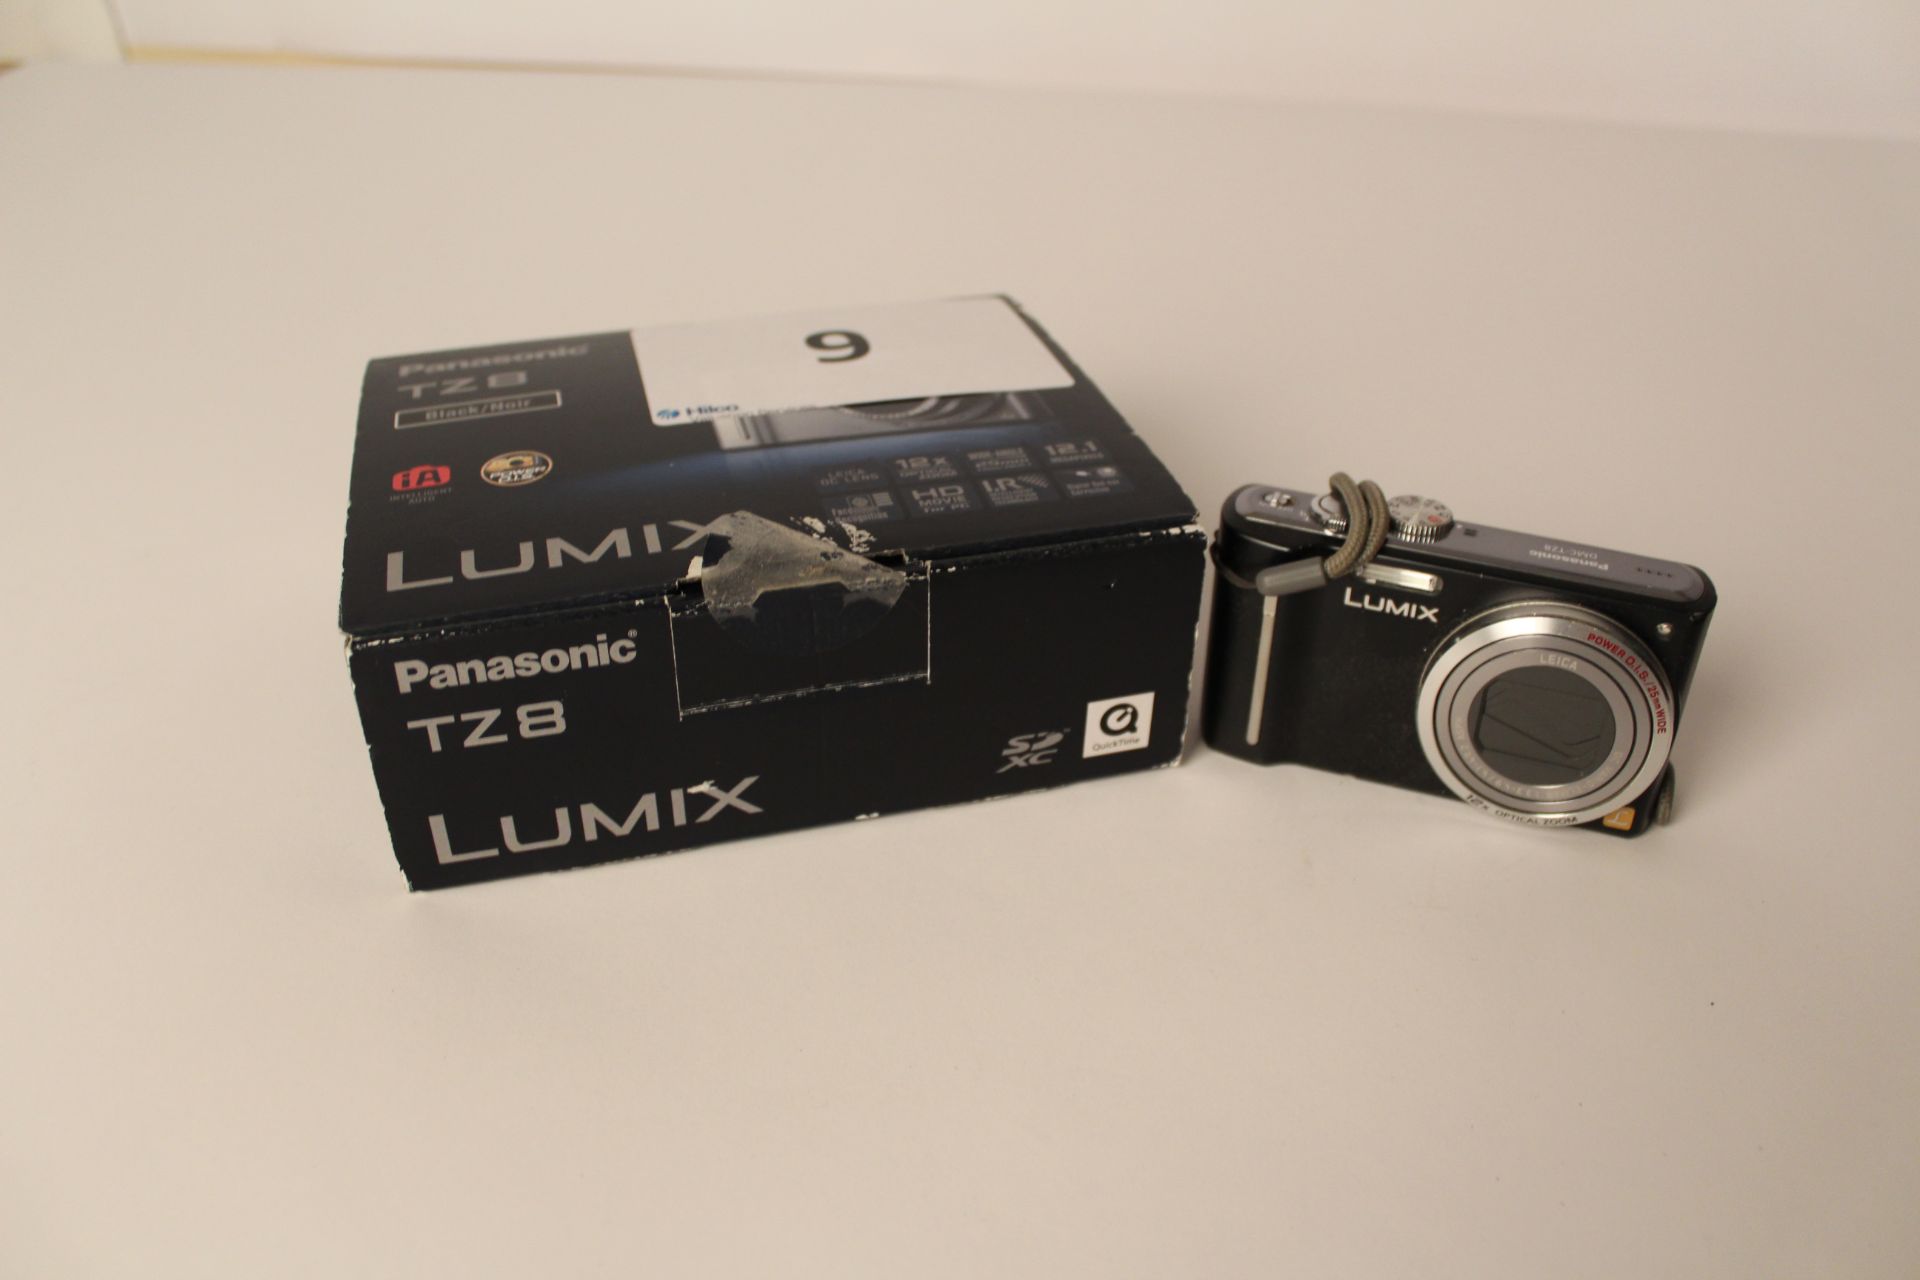 Panasonic Lumix TZ8 compact camera